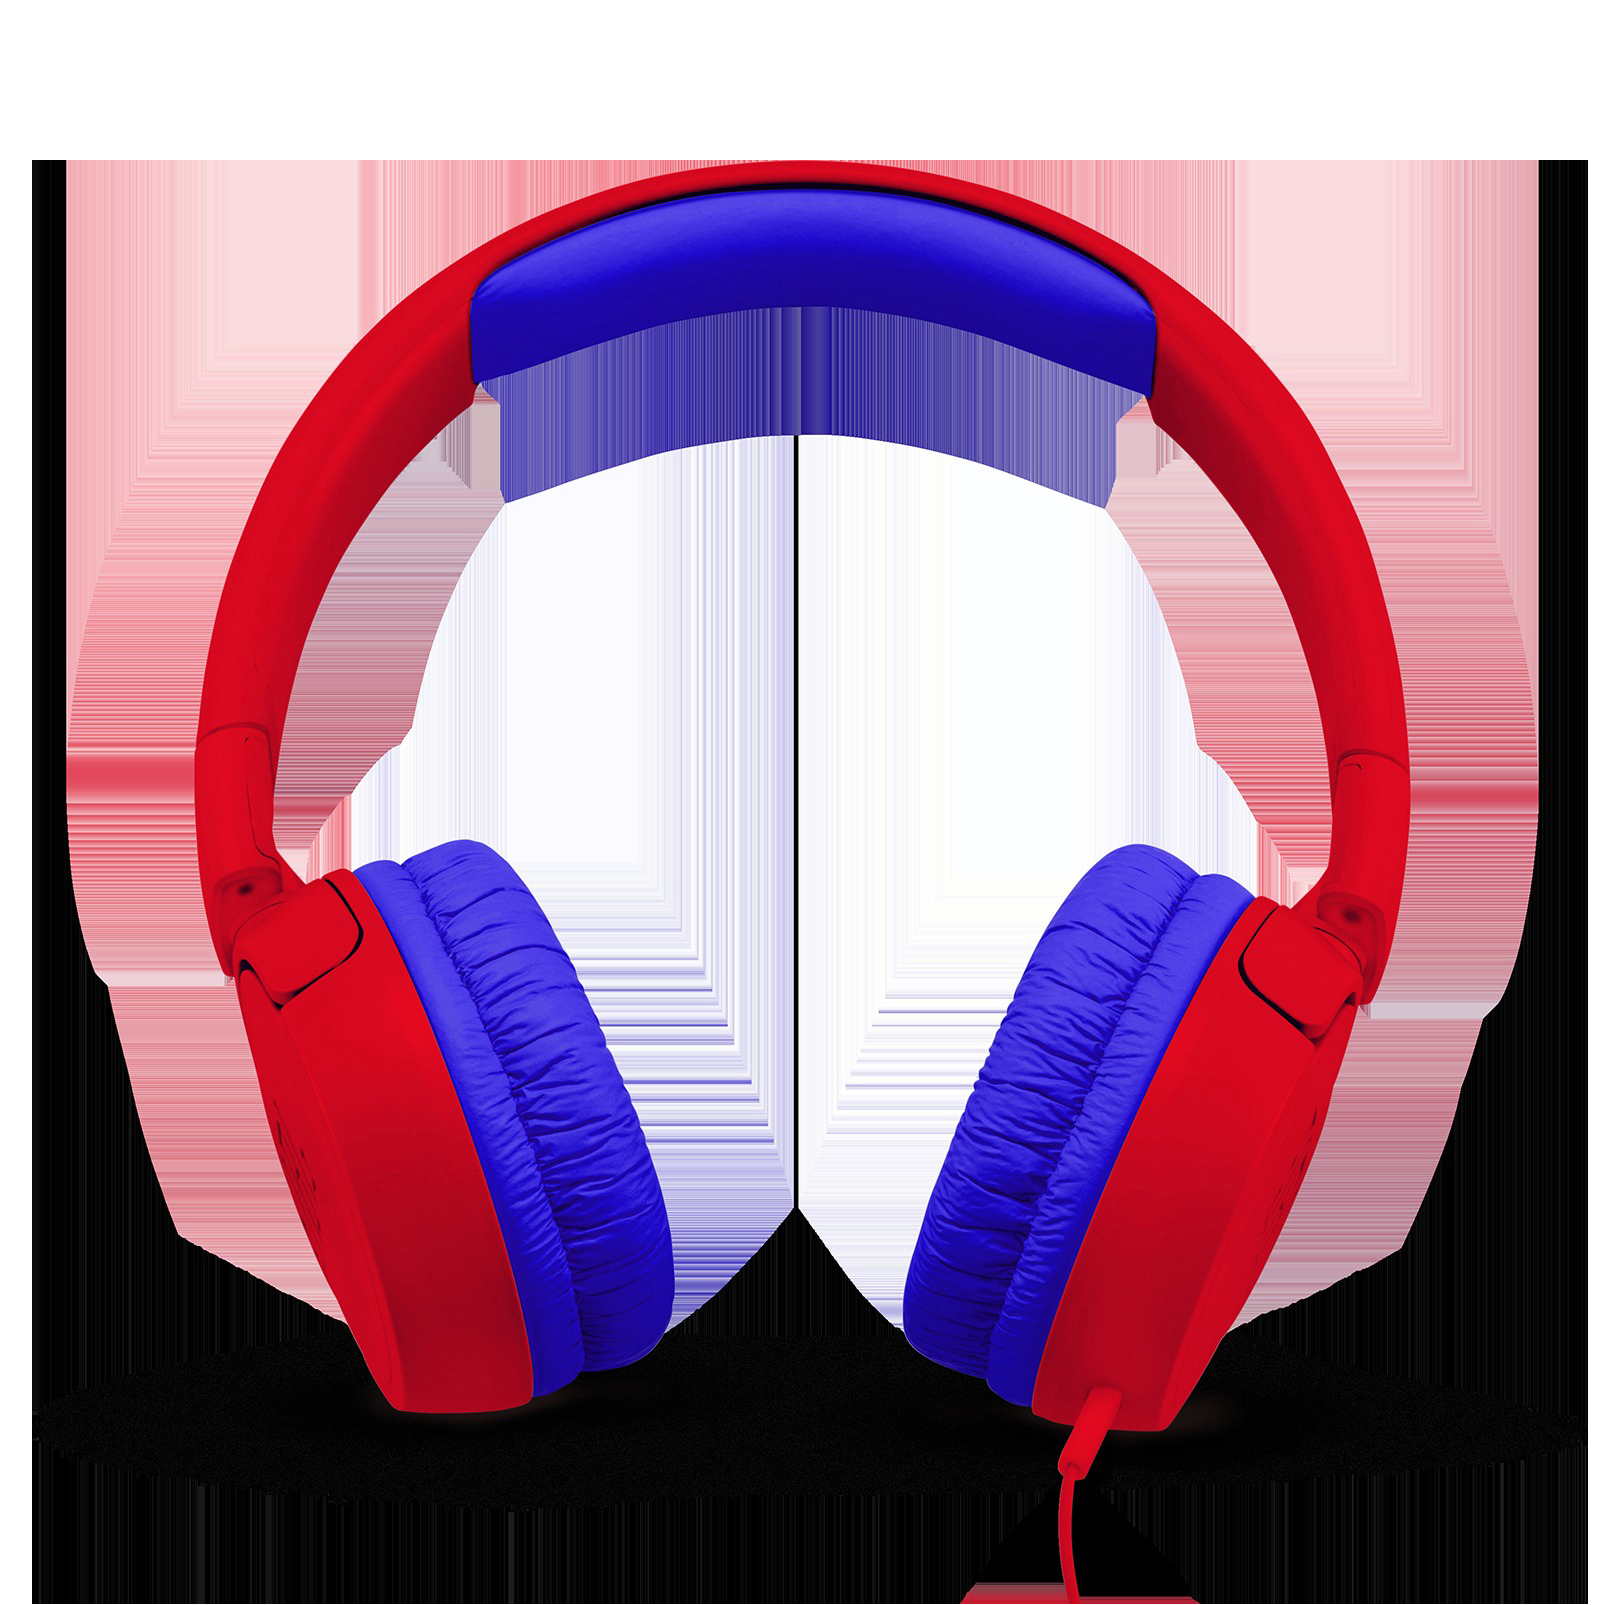 JBL JR300, On-ear Kopfhörer Rot/Blau